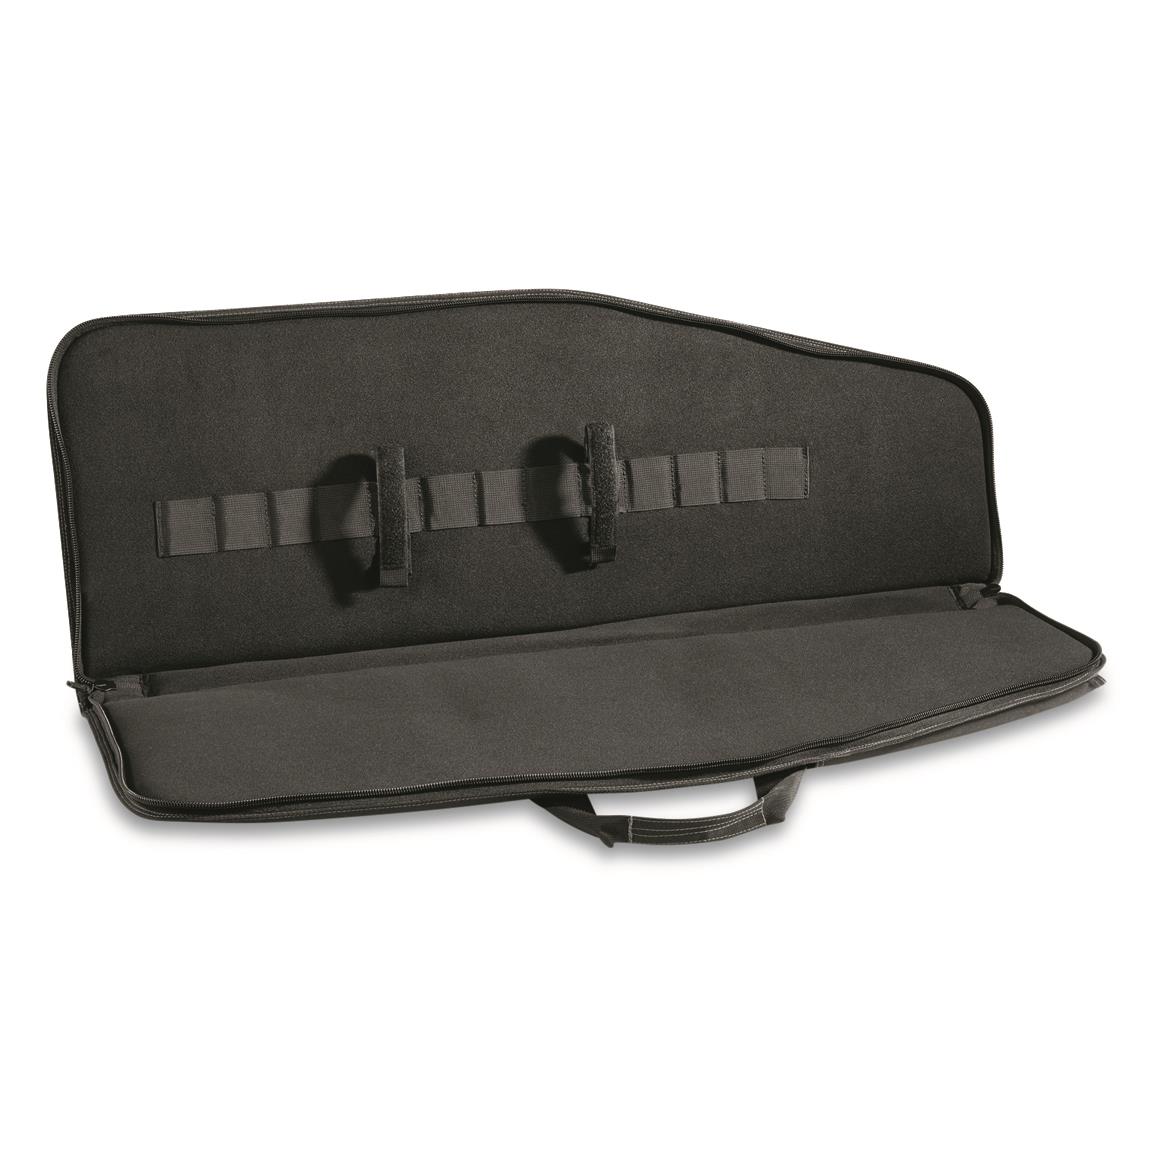 2x Green 2x Black Gun Sock Handgun Pistol Storage Sleeve Cover Tactical Bags 